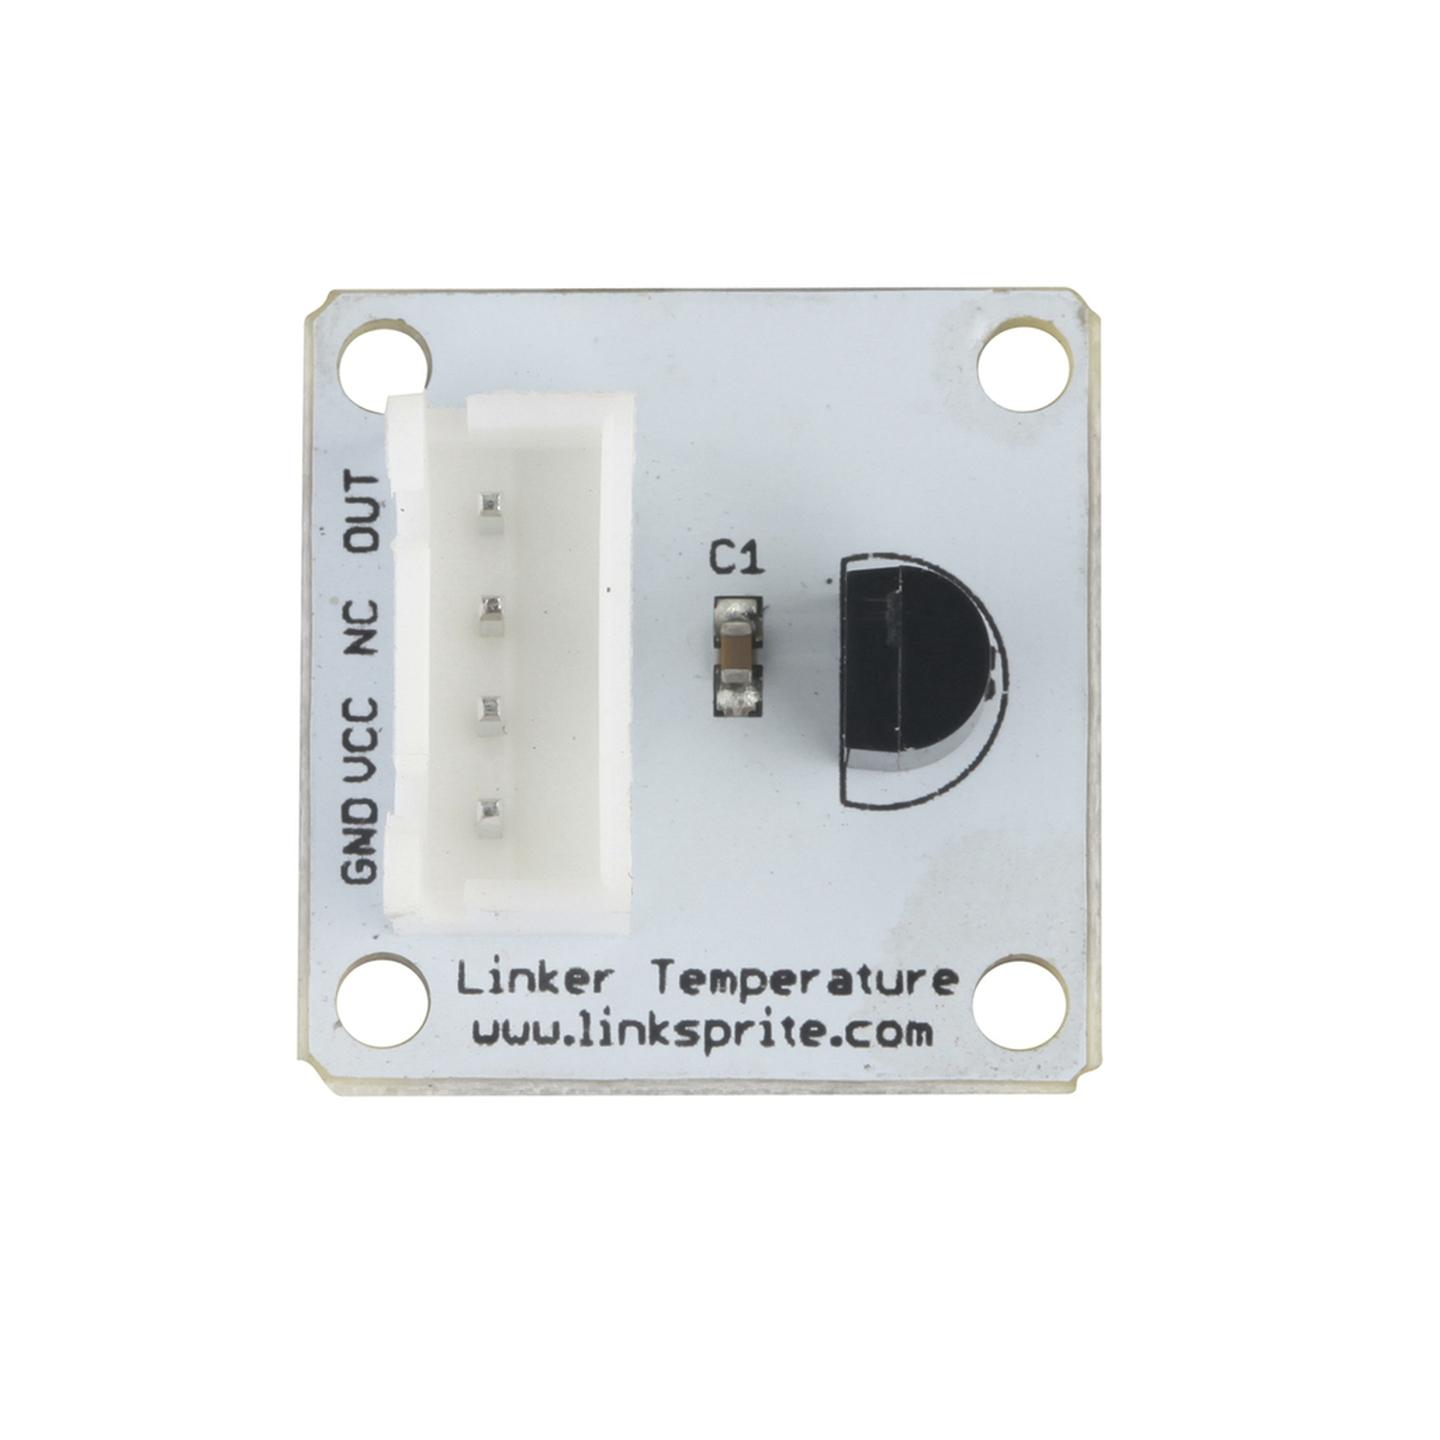 Linker Temperature Module For Arduino